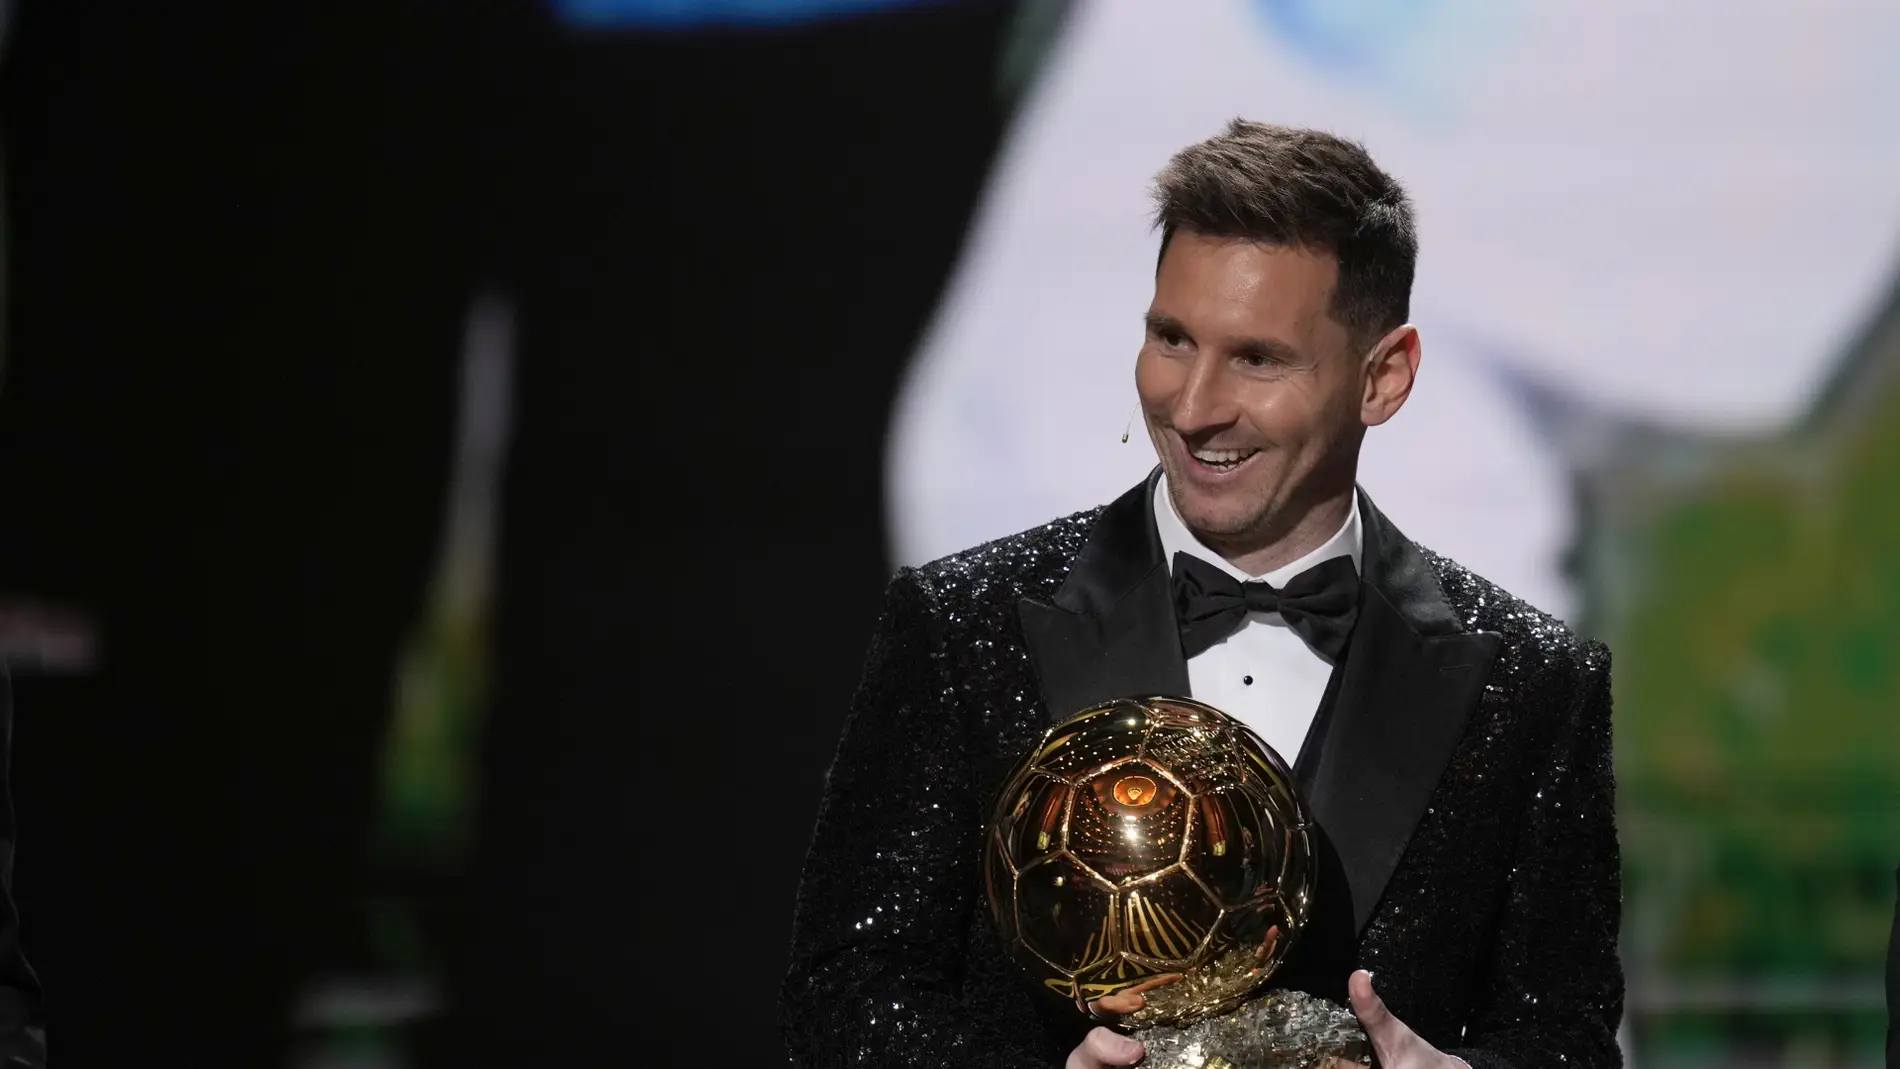 Lionel Messi, el mejor futbolista del planeta